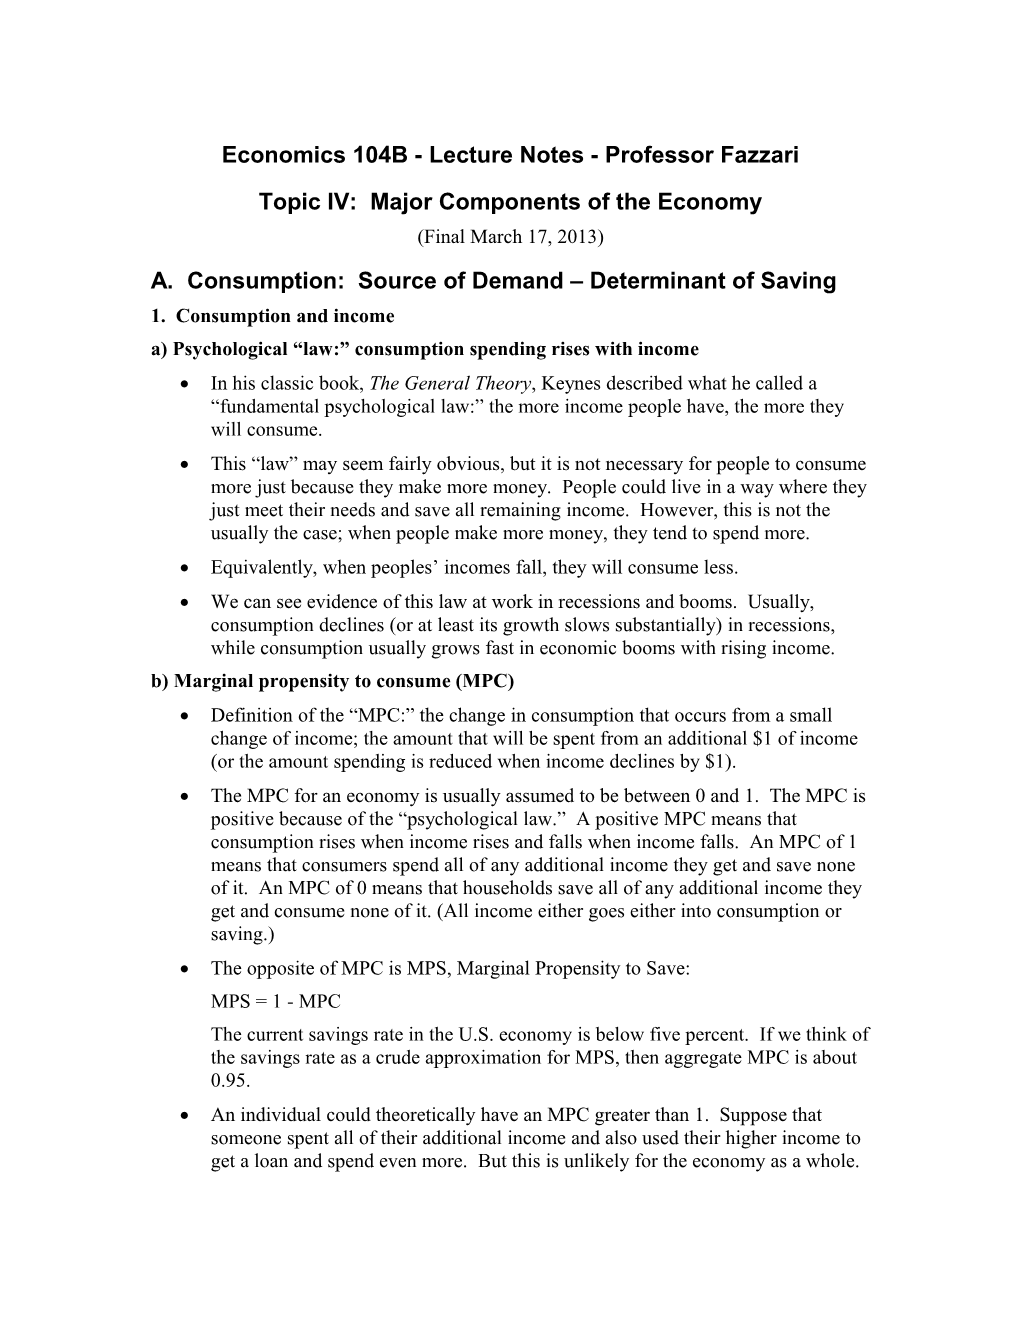 Economics 104B - Lecture Notes Part III